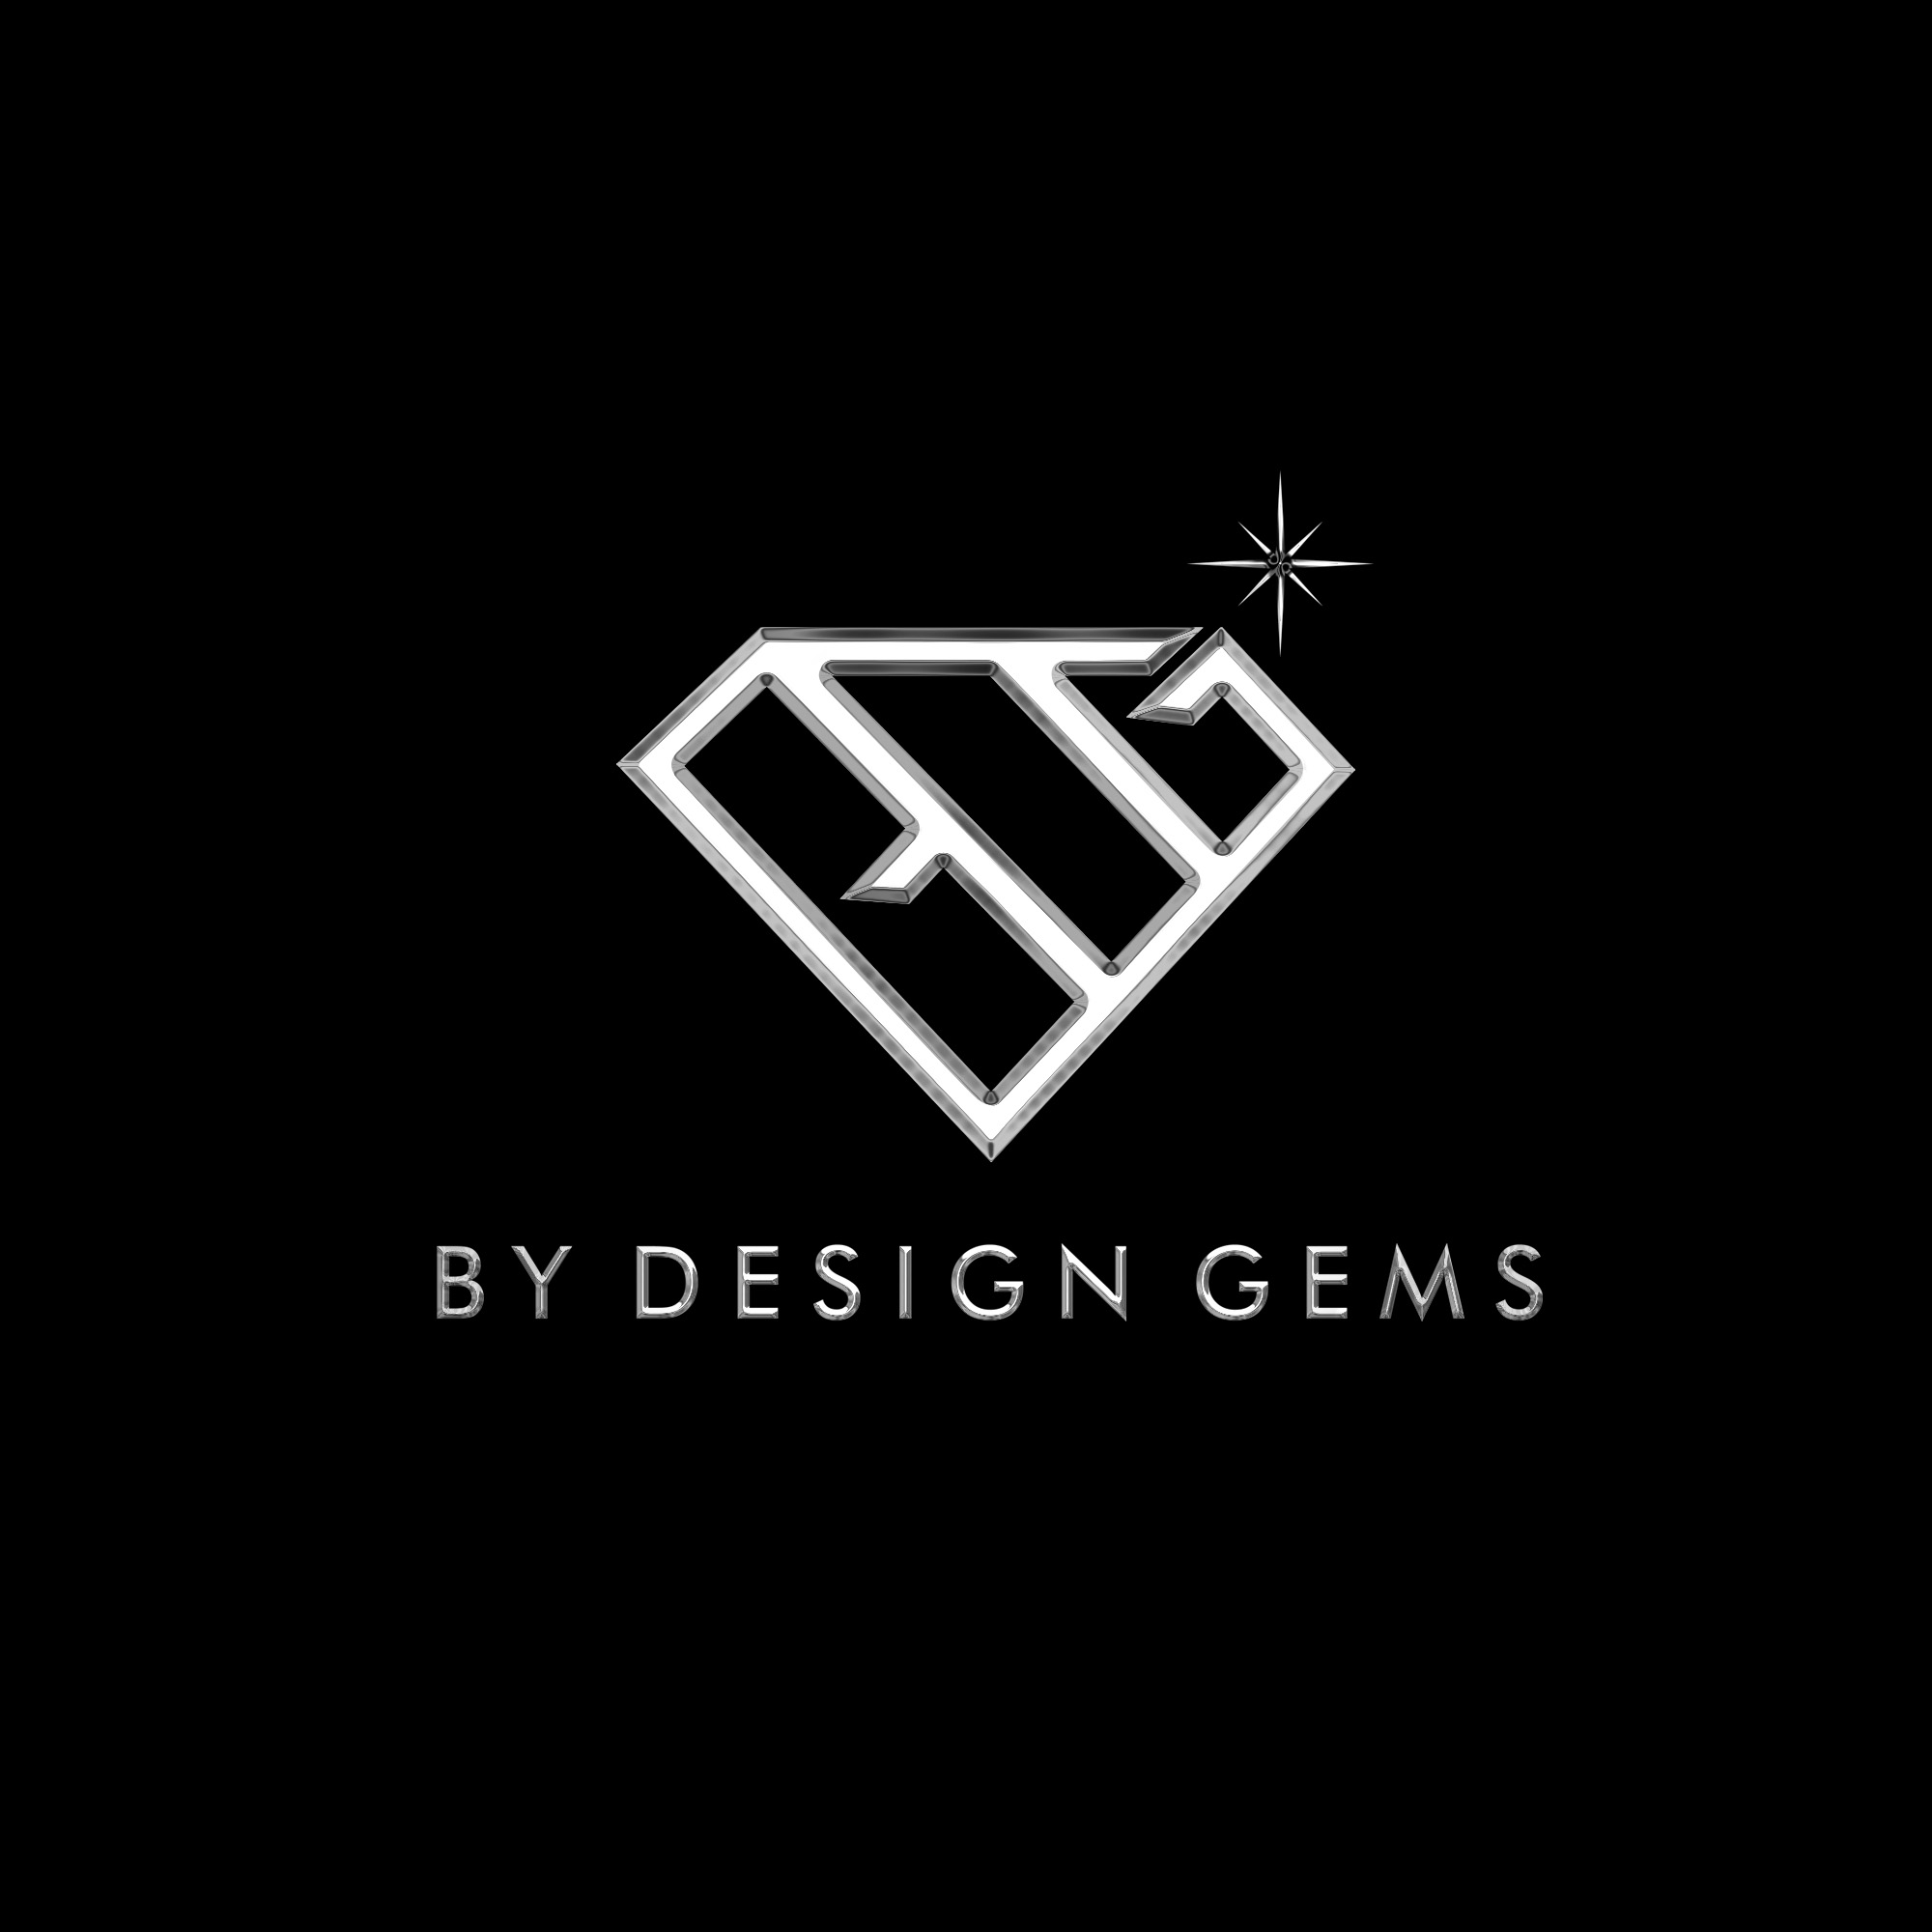 By Design Gems